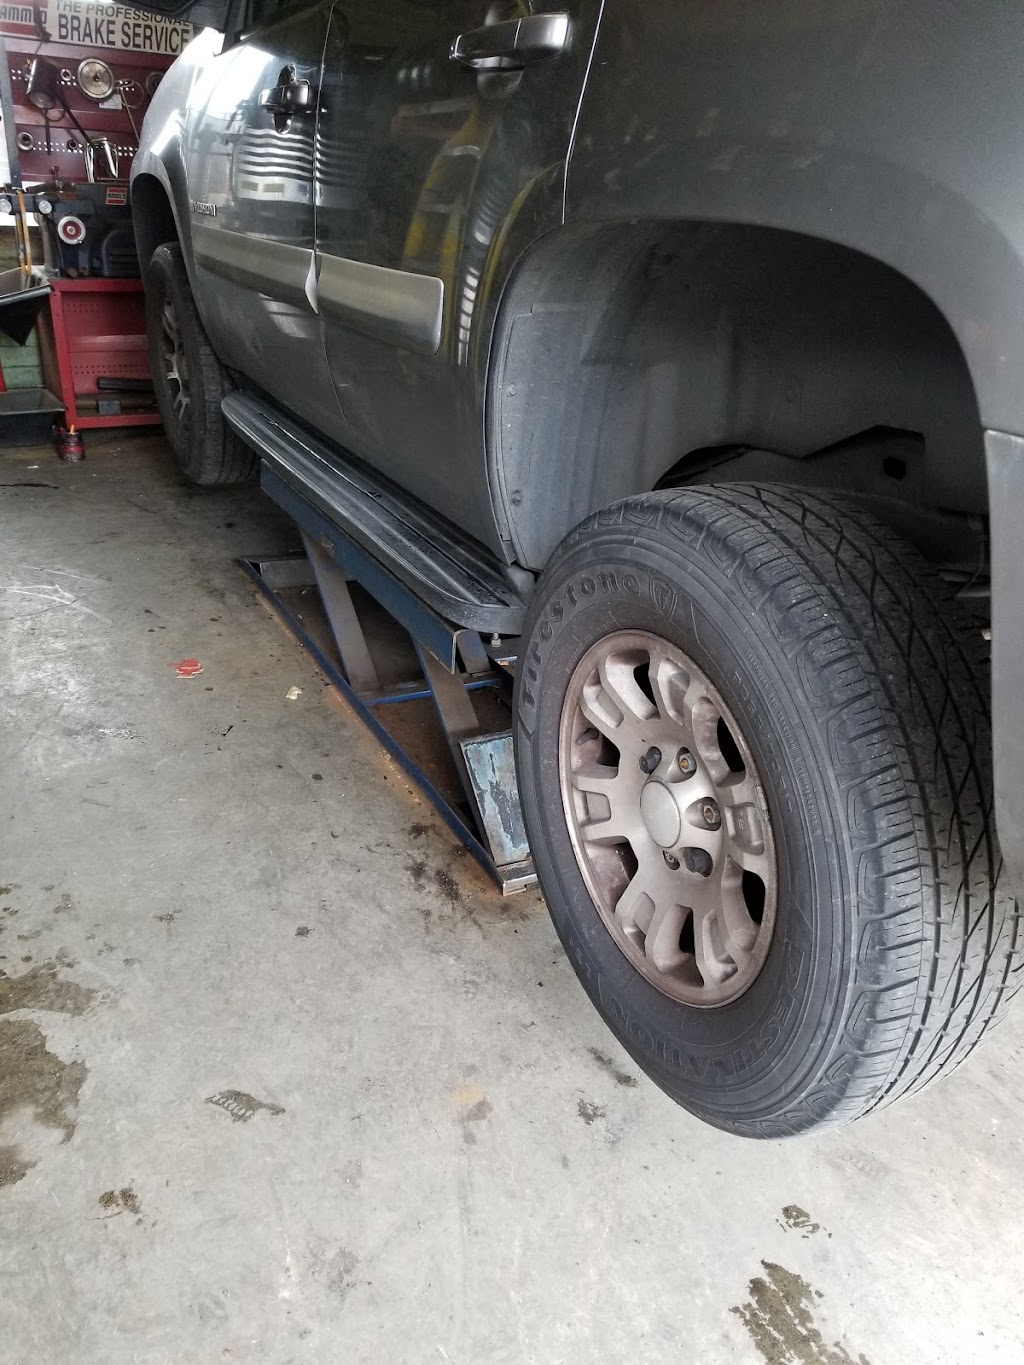 Cernas Tire & Auto Repair | 1291 Rumrill Blvd, San Pablo, CA 94806 | Phone: (510) 965-1648